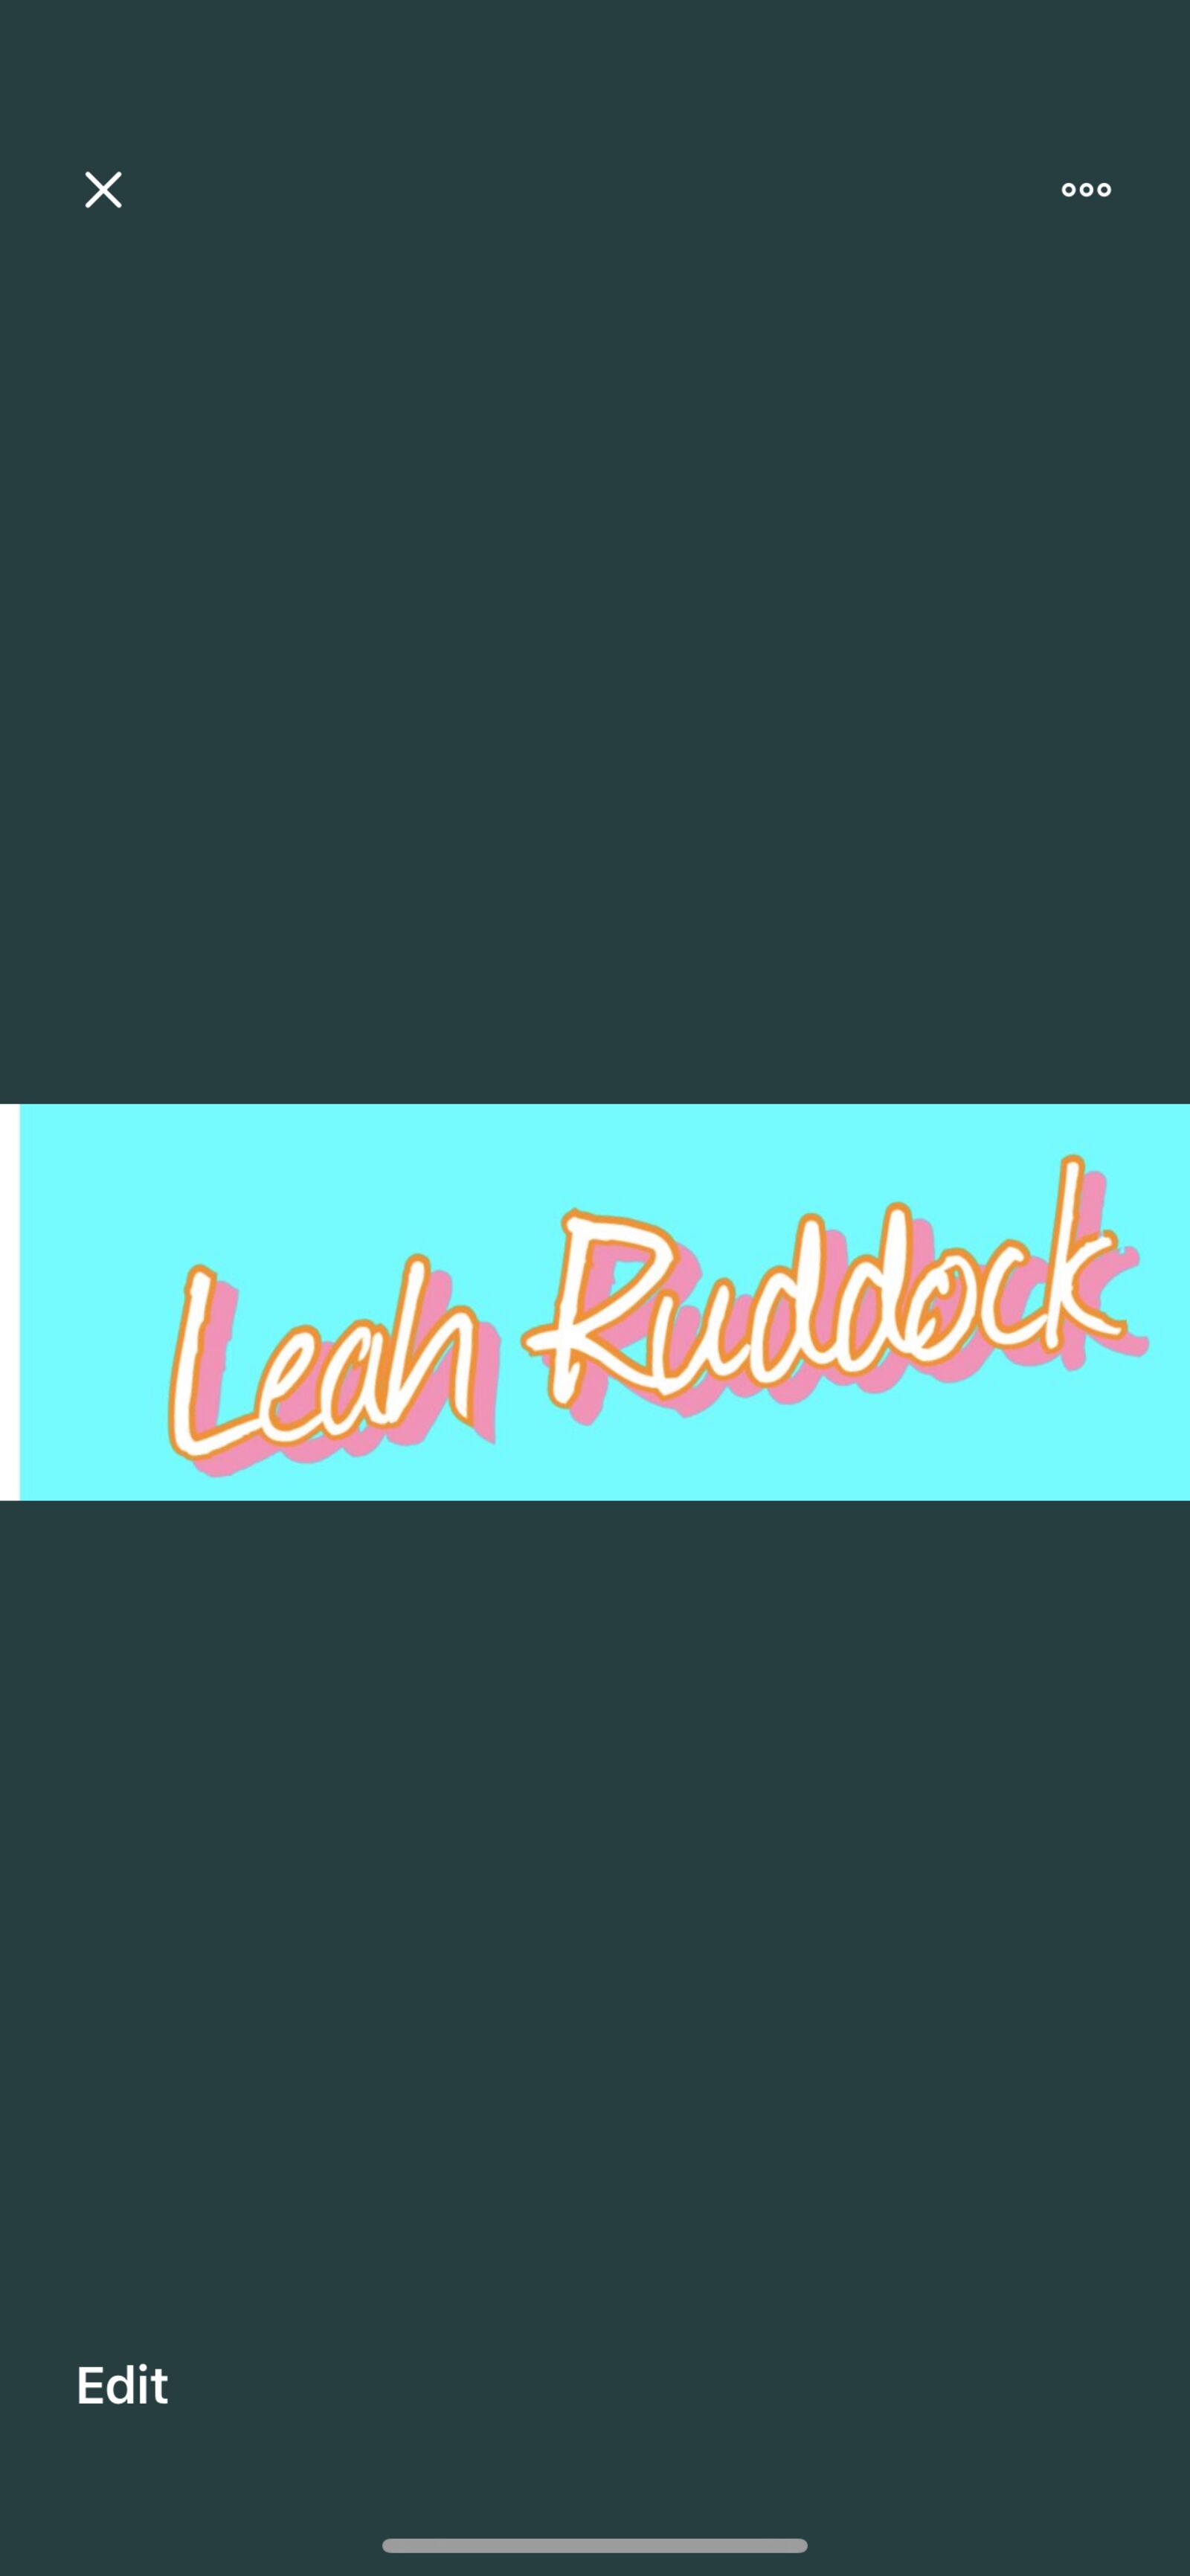 leahruddock